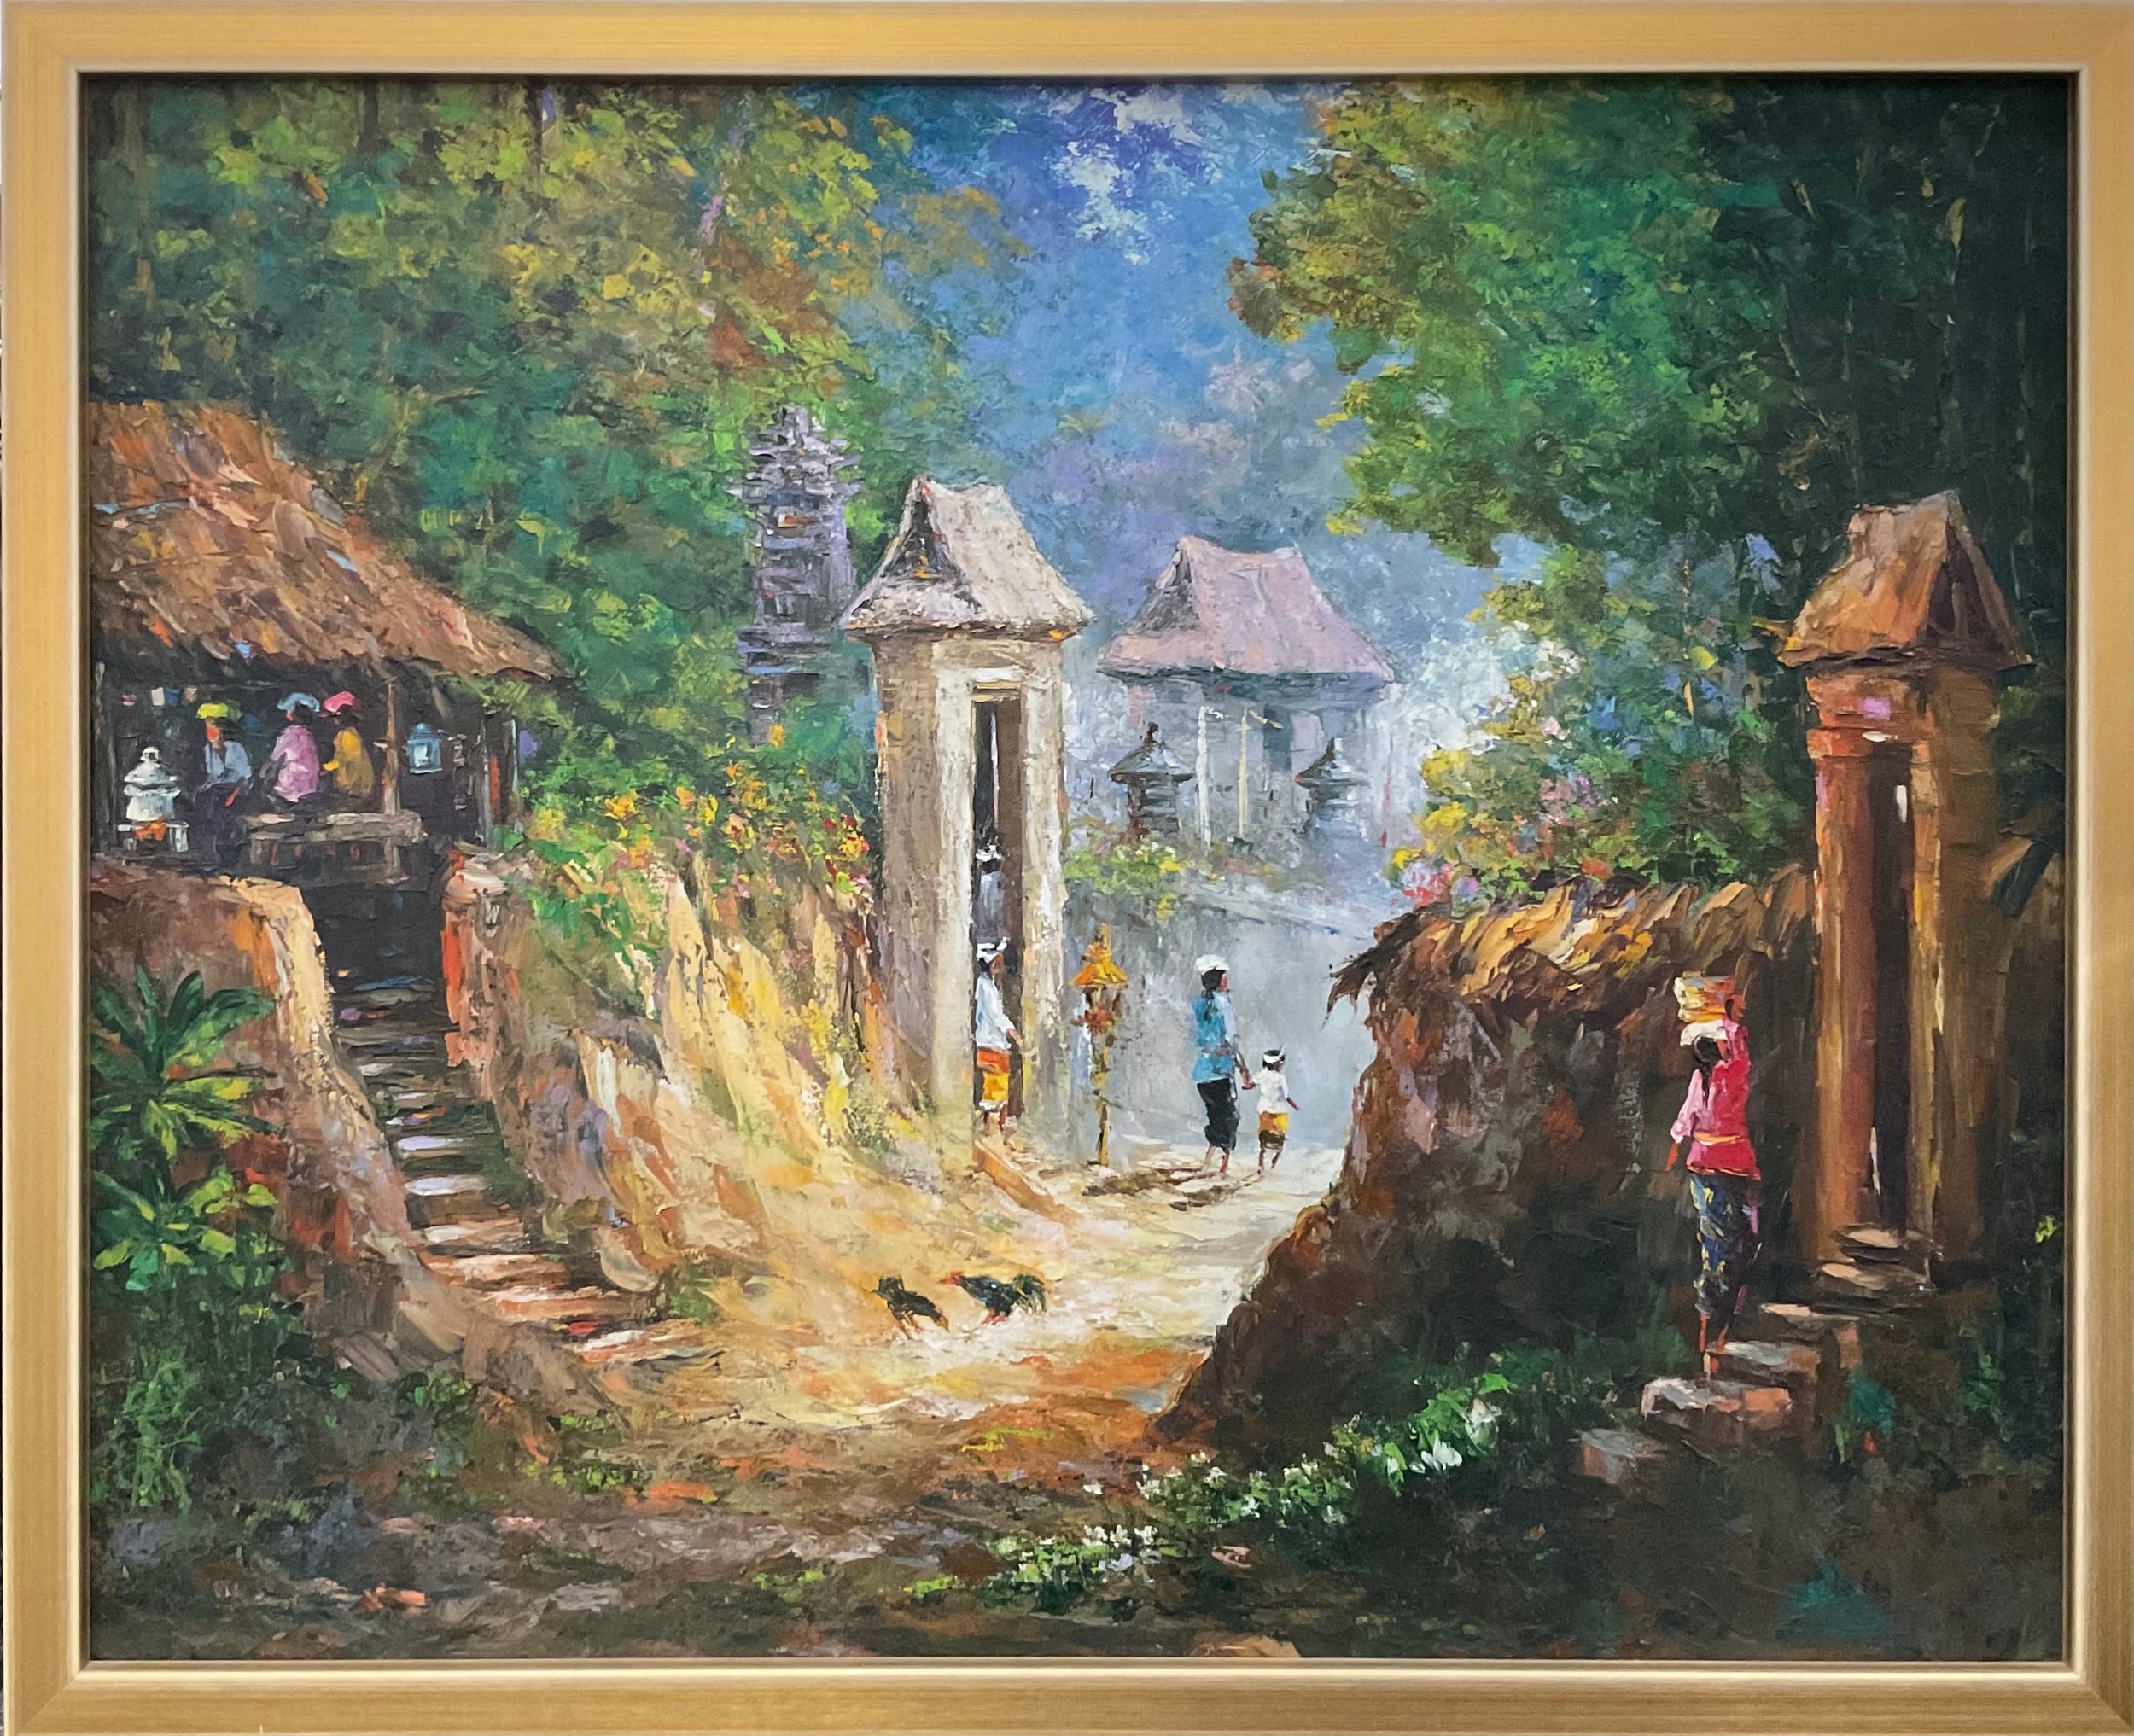 Dioko Sutrisno Bali Village oil on canvas, 150cm x 120cm - Image 2 of 2